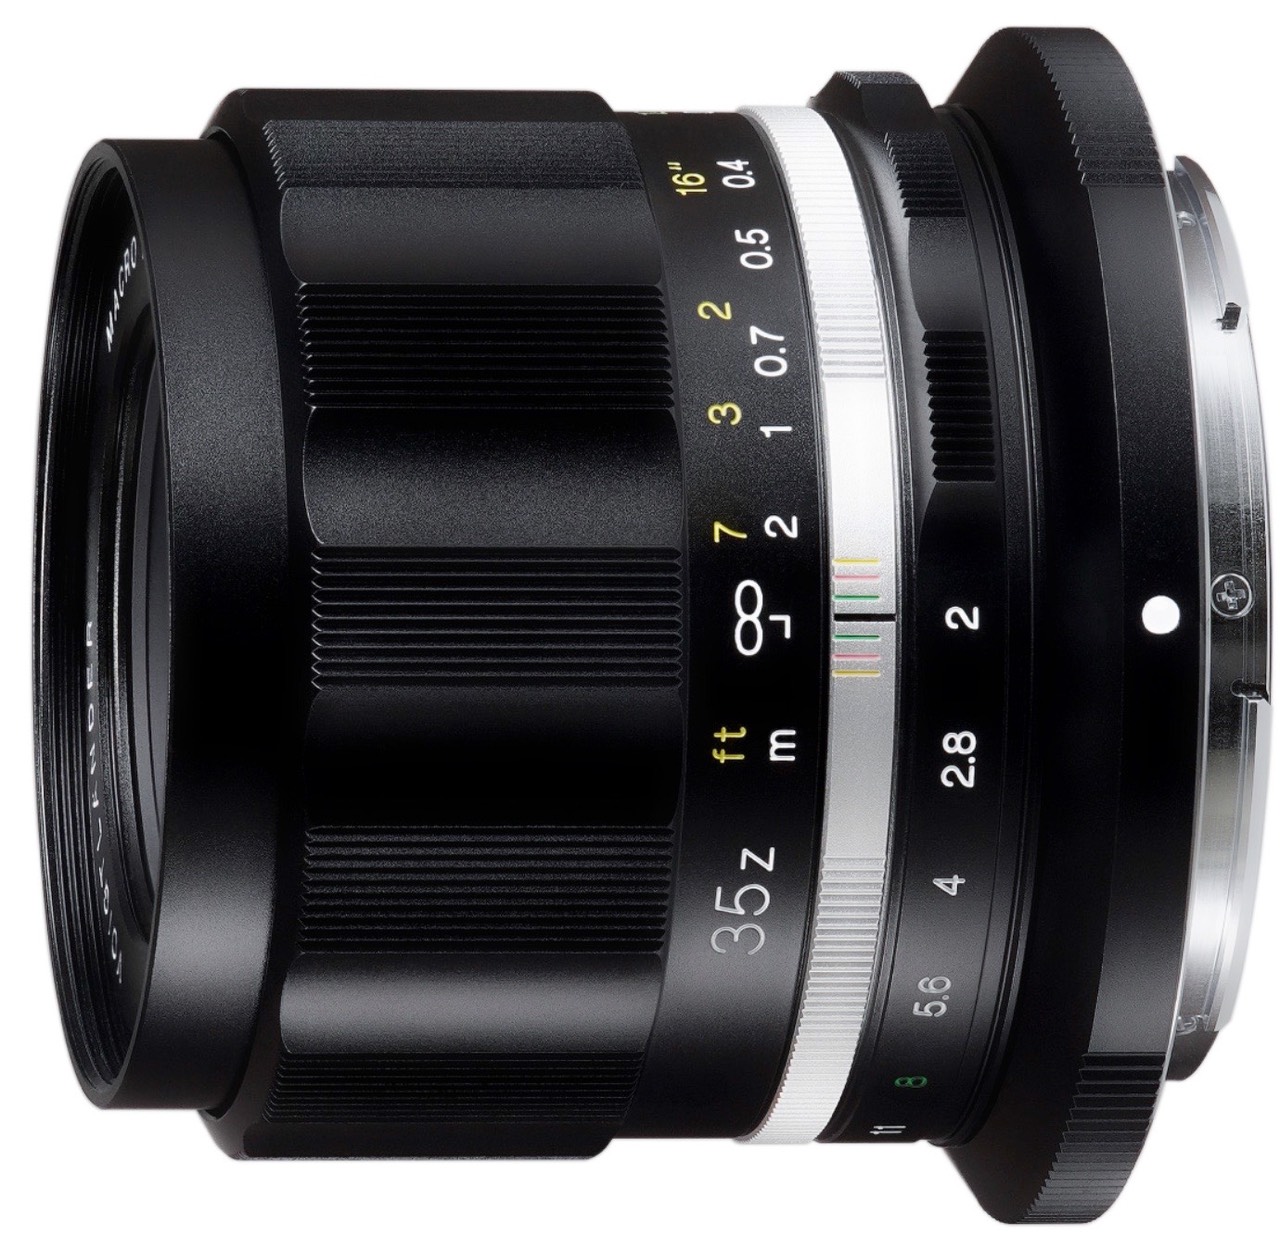 Voigtlander 35mm f/2 APO-Ultron Macro Lens Specifications